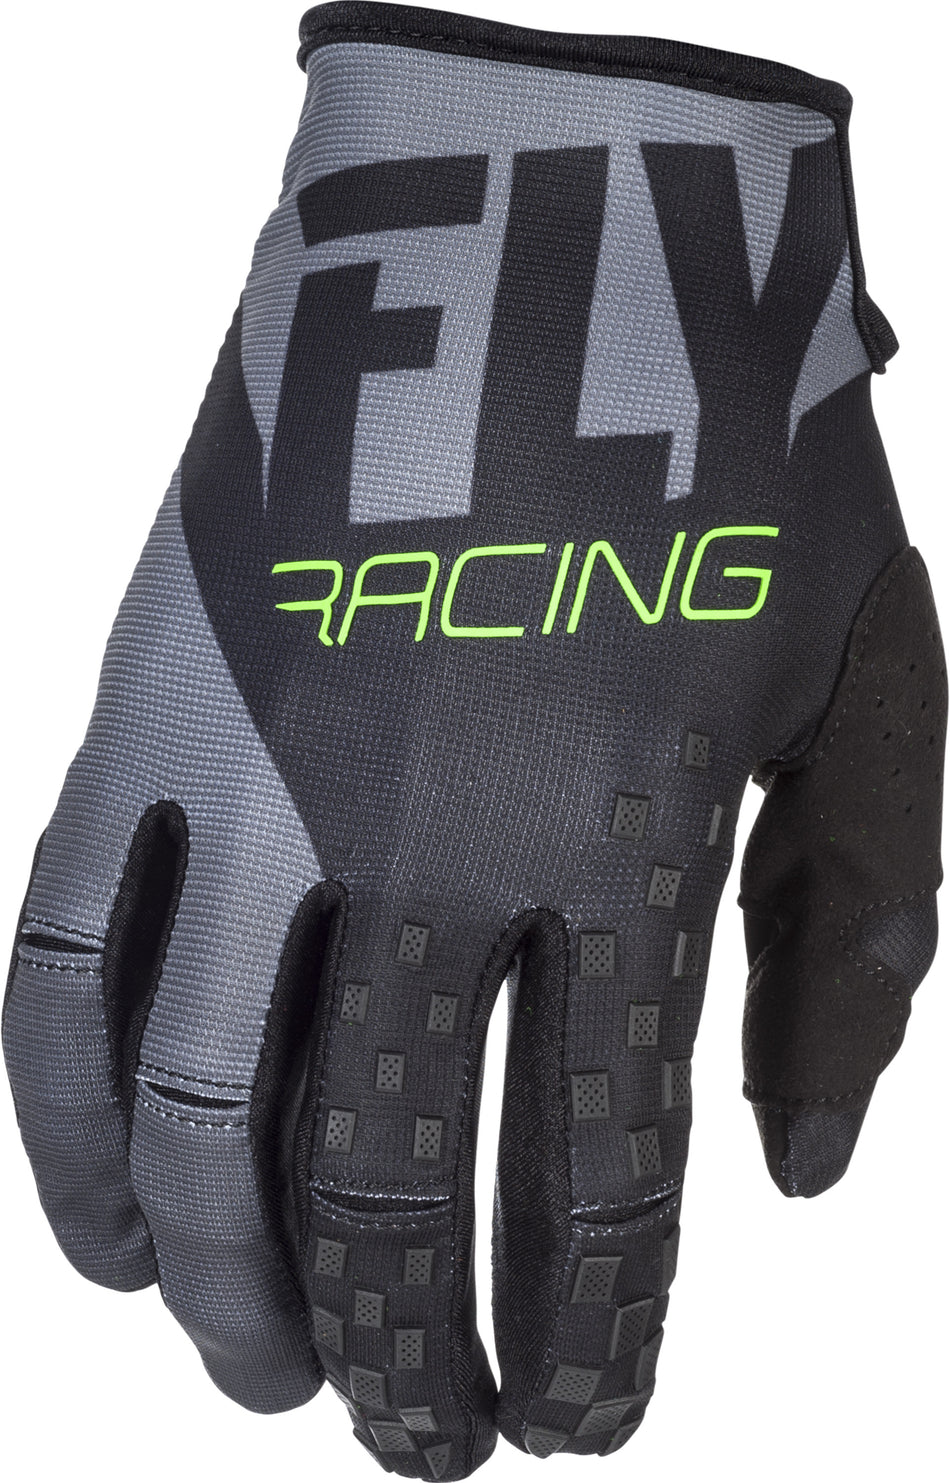 FLY RACING Kinetic Gloves Black/Grey Sz 5 371-41005